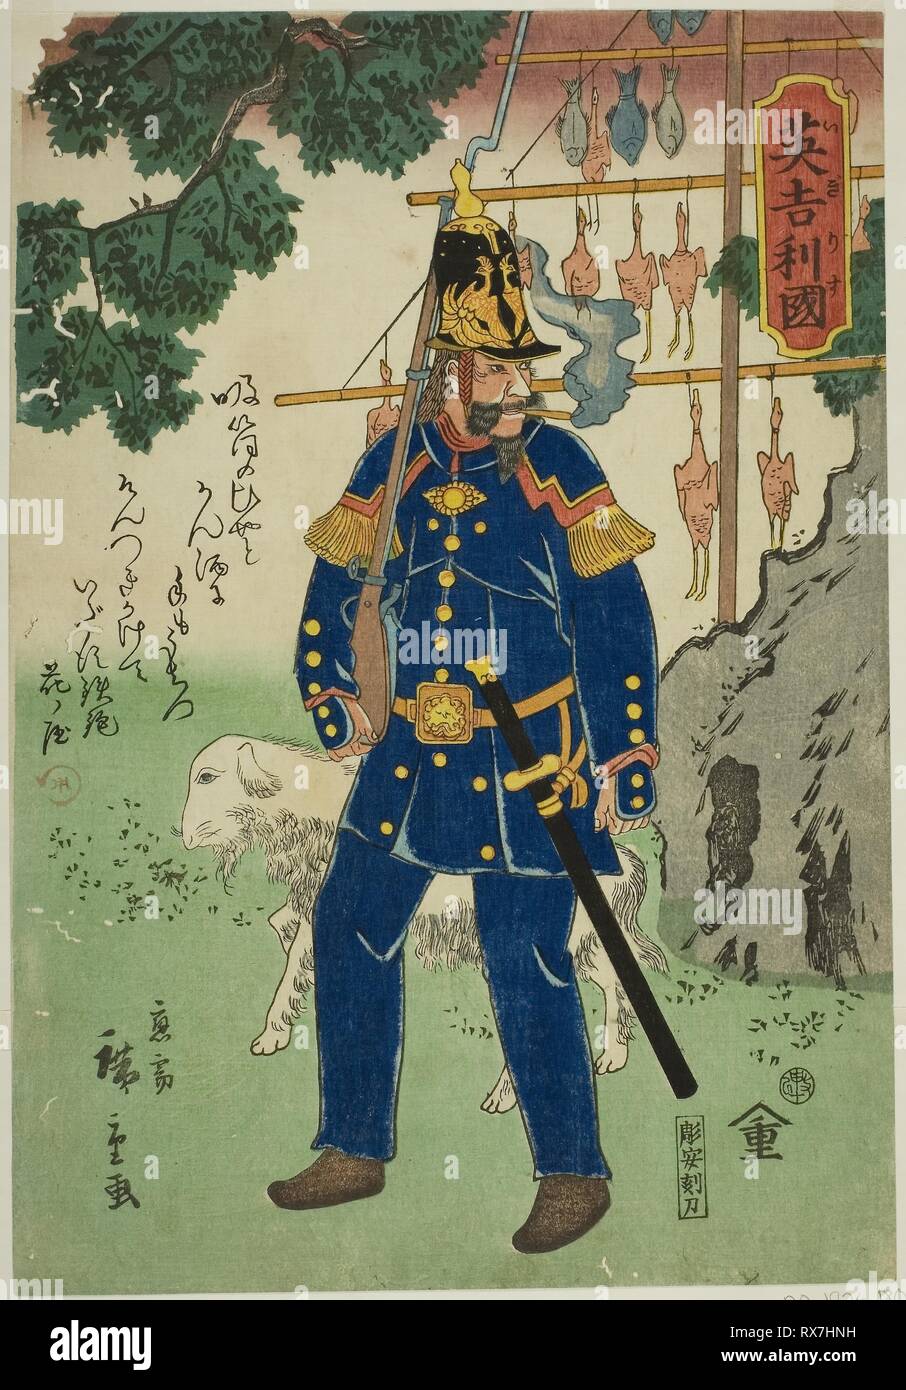 England (Igirusu). Utagawa Hiroshige II (shigenobu); Japanisch, 1826-1869. Datum: 1860. Abmessungen: . Farbe holzschnitt; Oban. Herkunft: Japan. Museum: Das Chicago Art Institute. Stockfoto